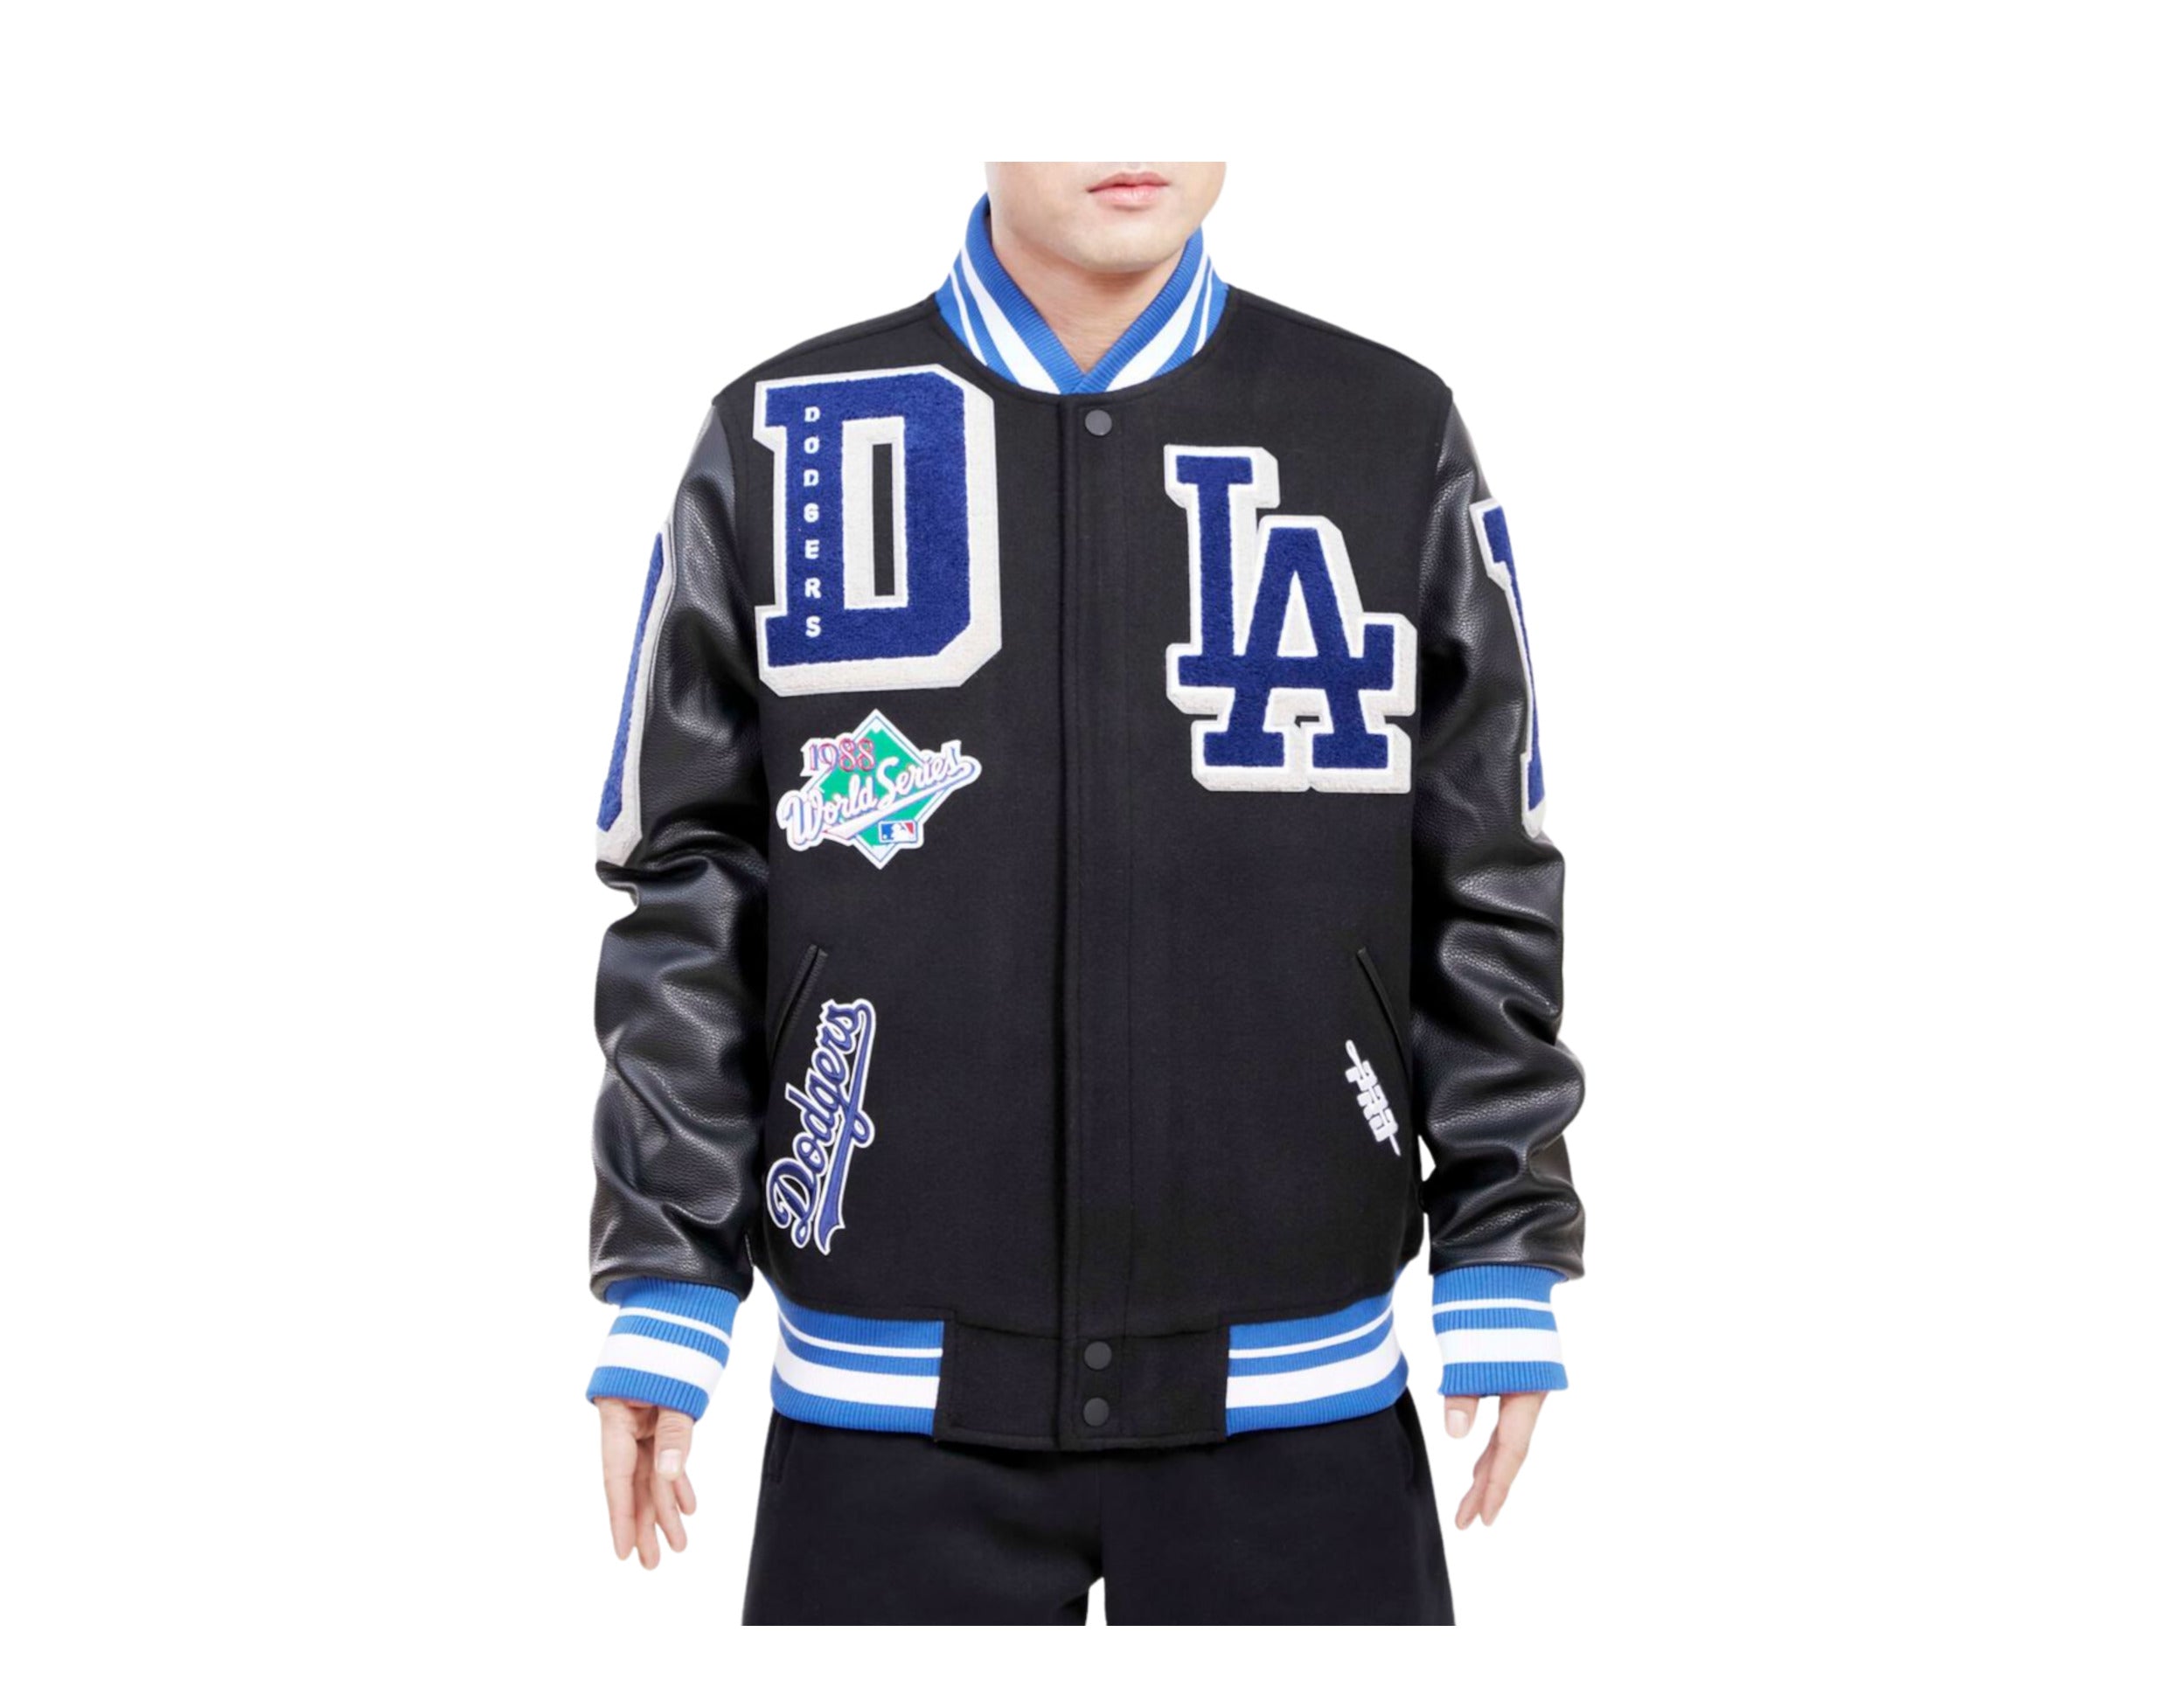 Los Angeles Dodgers Logo Varsity Full-Zip Jacket